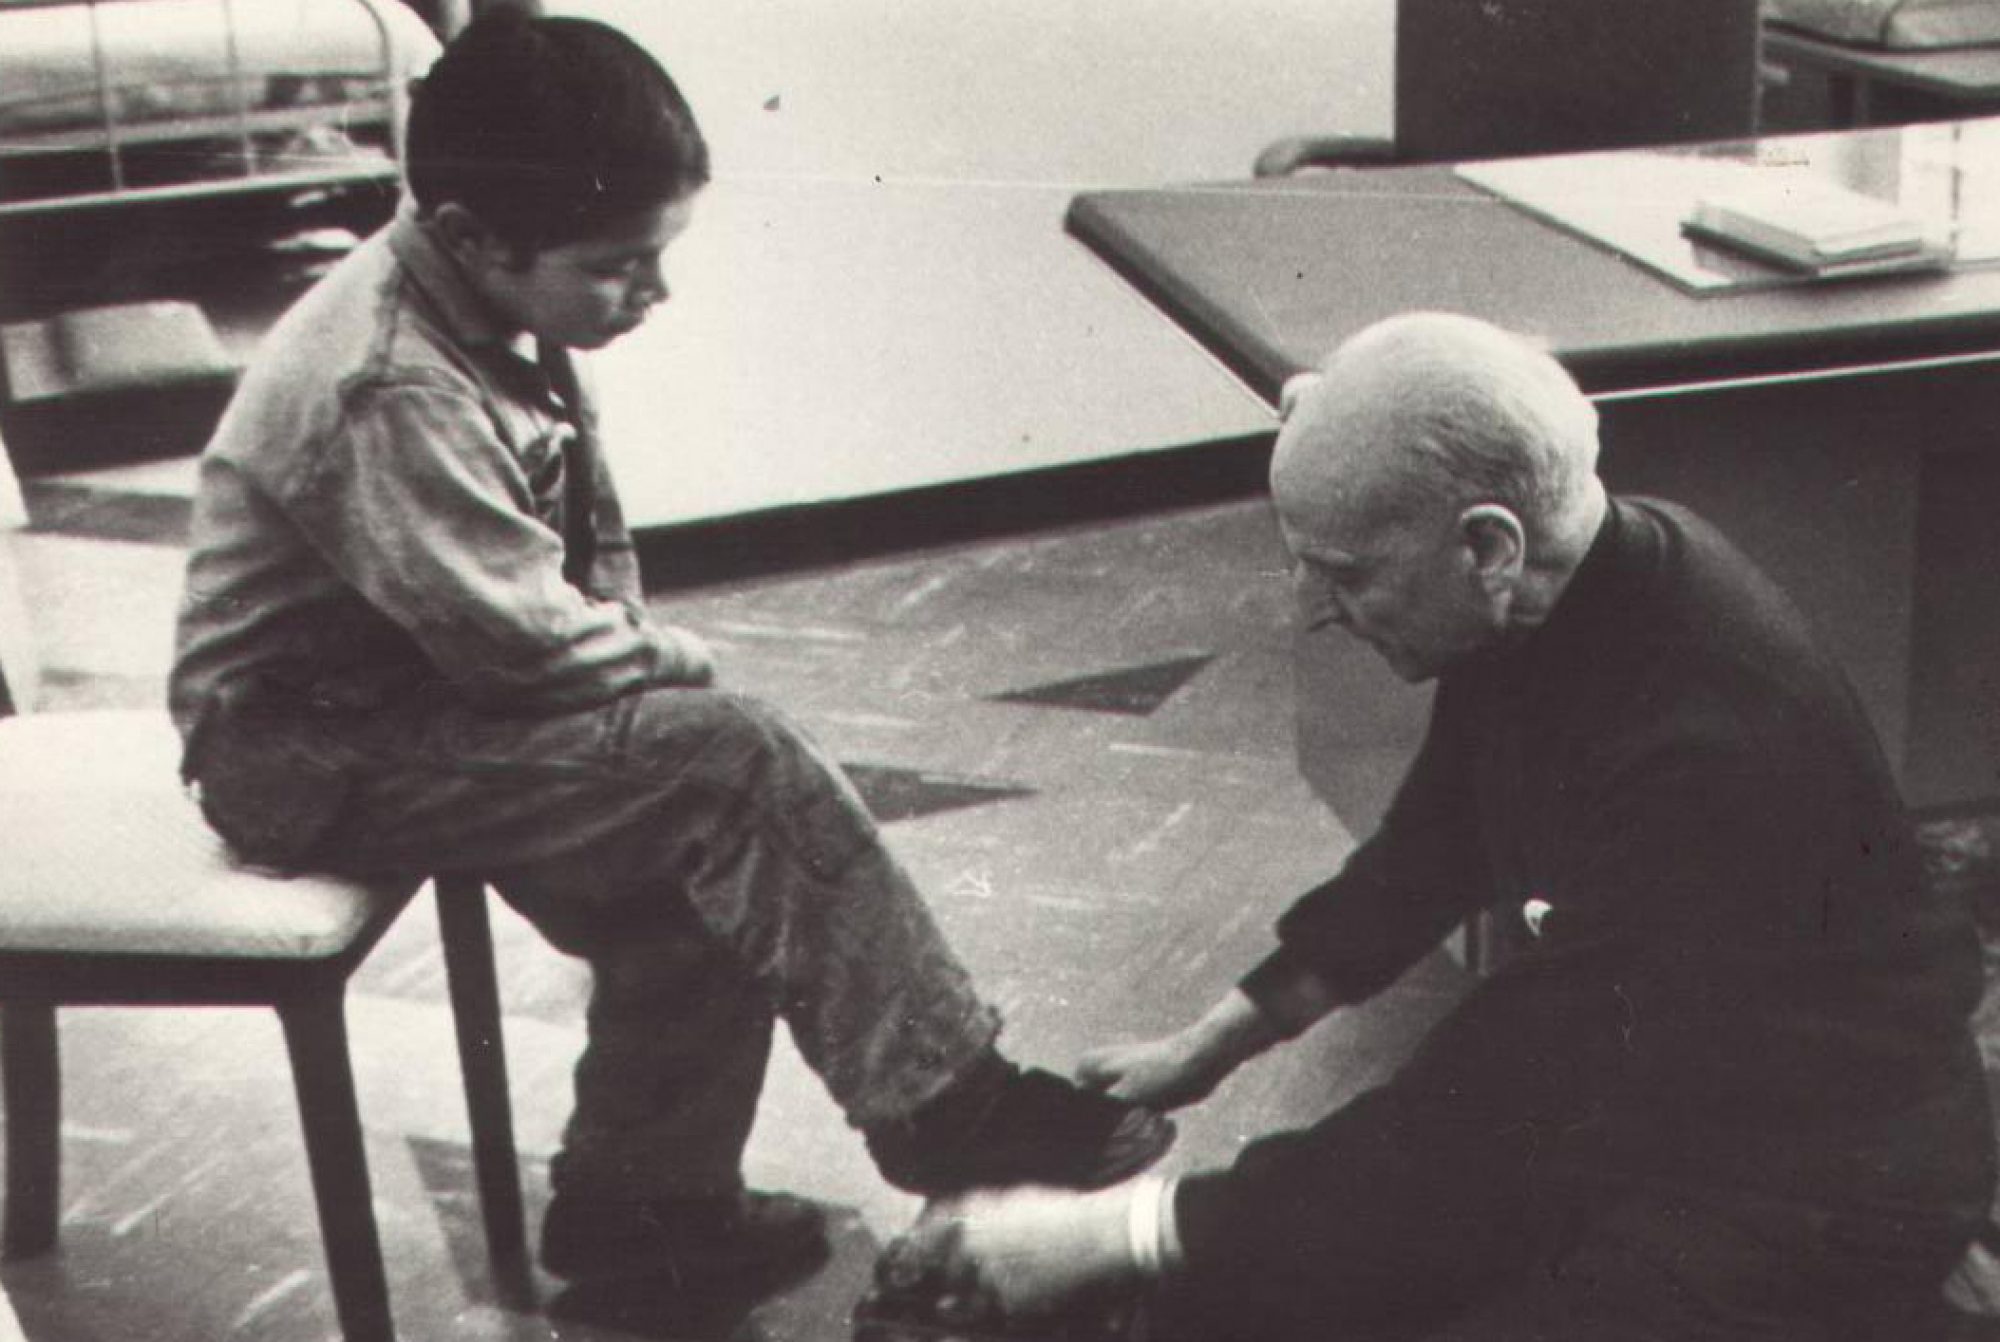 Fr Pedro Arrupe SJ shining shoes for a children in Quito, Ecuador in 1971.